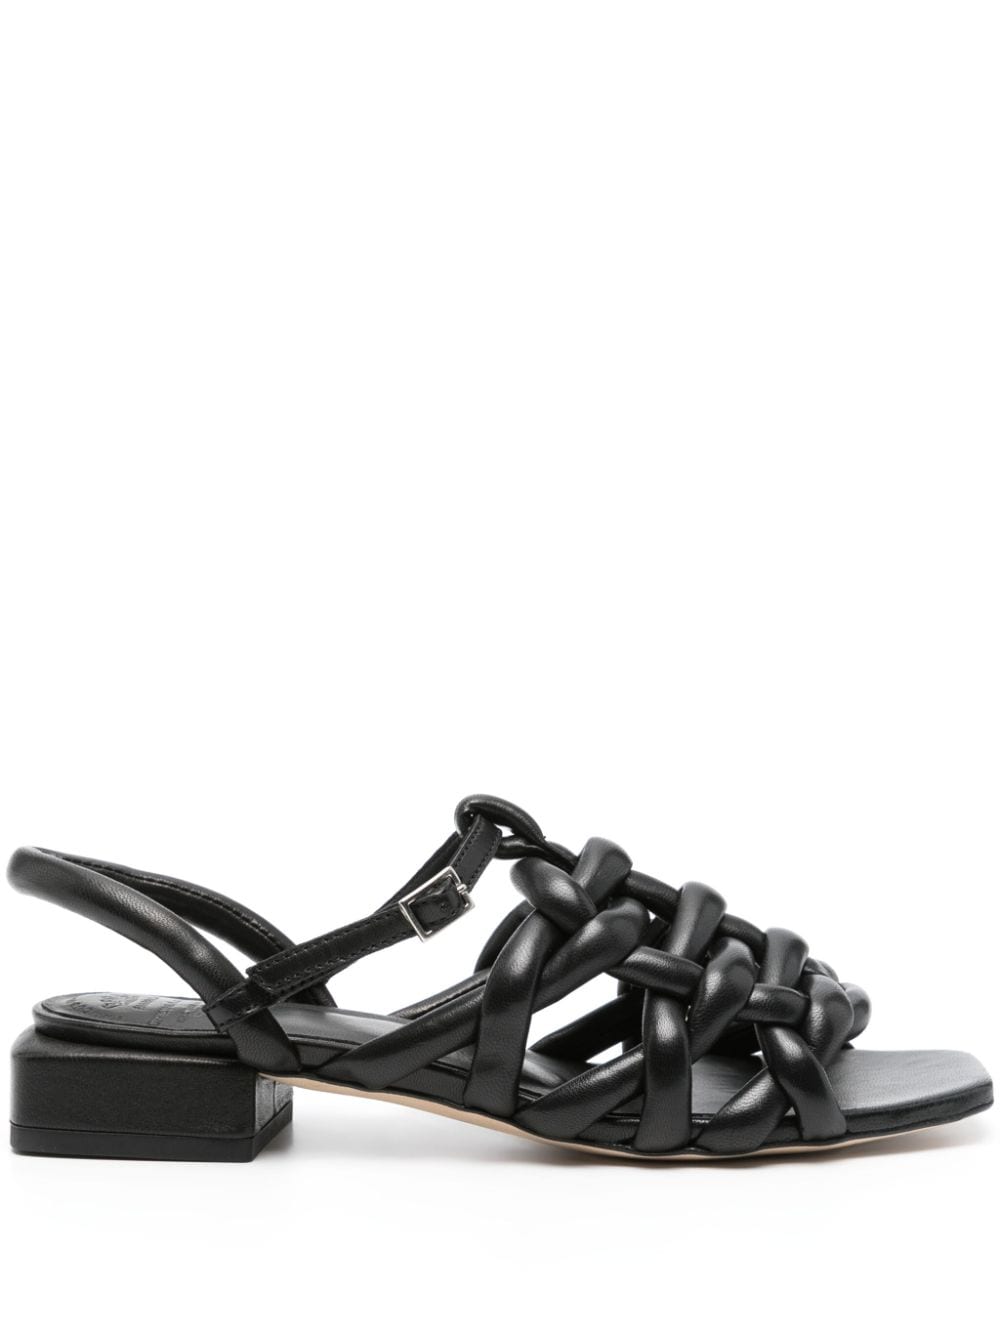 Officine Creative Gillian Leather Sandals In Black